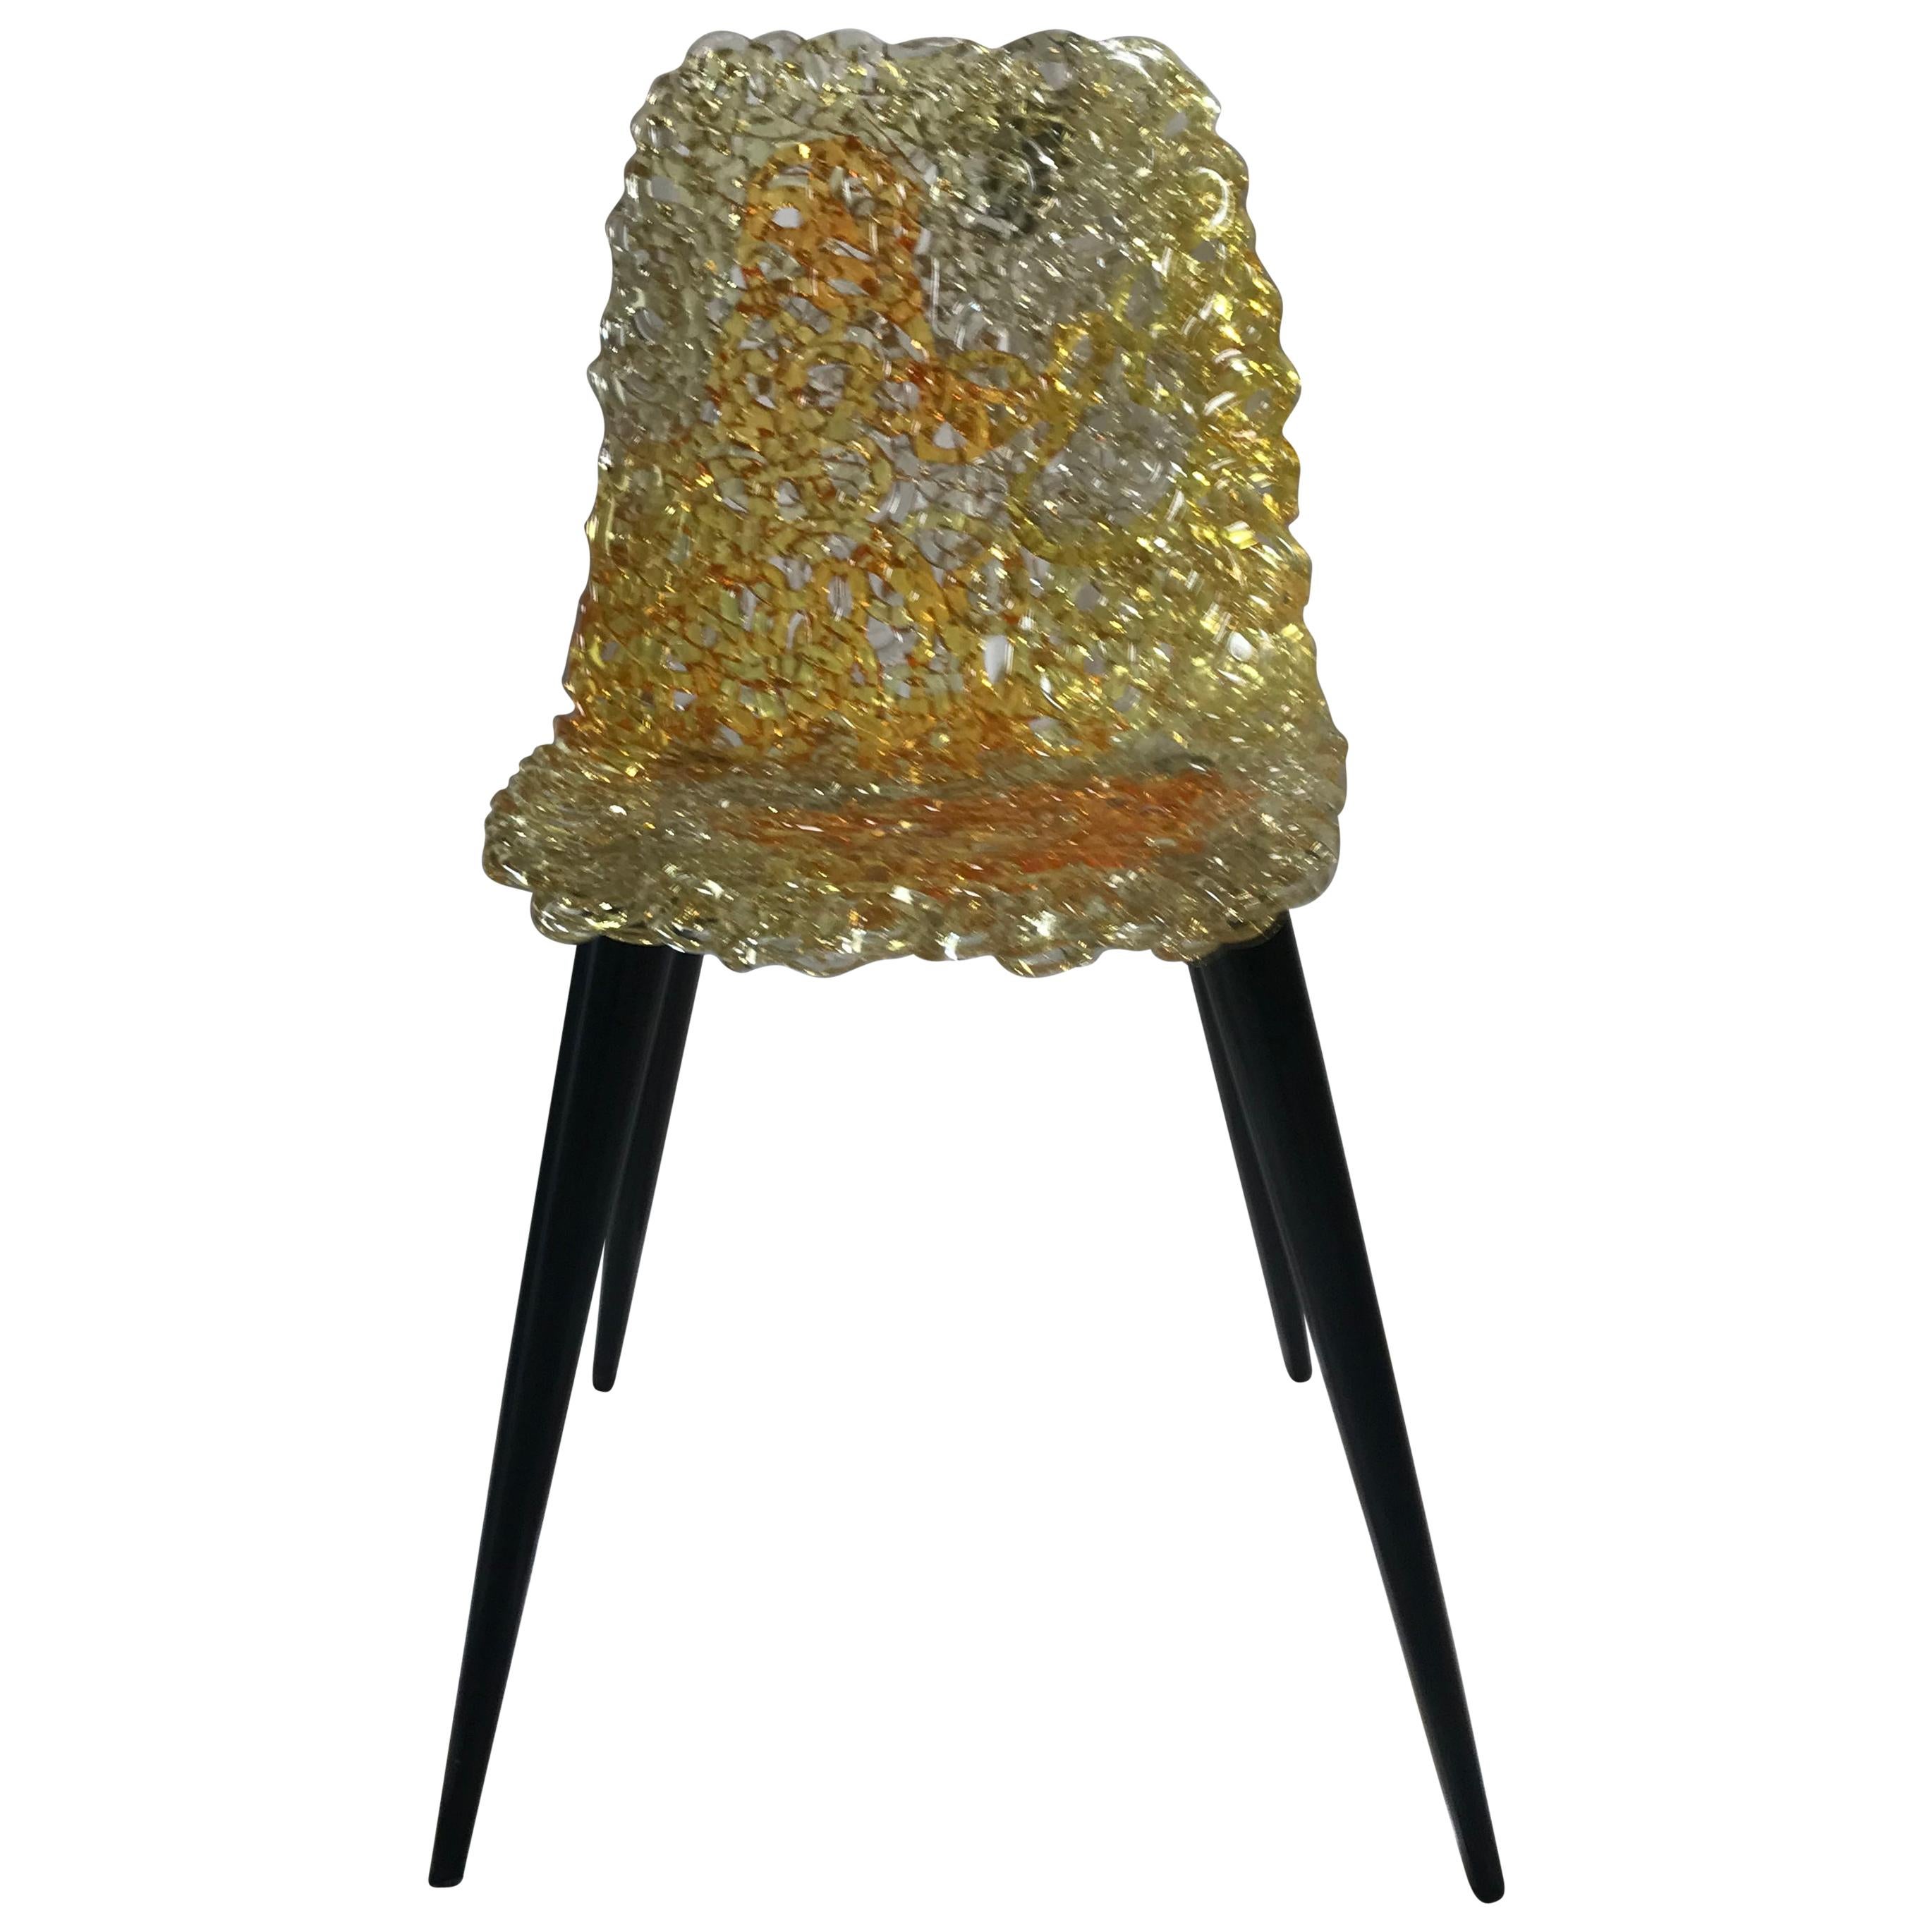 Edra Gina Chair in Gold or Topaz